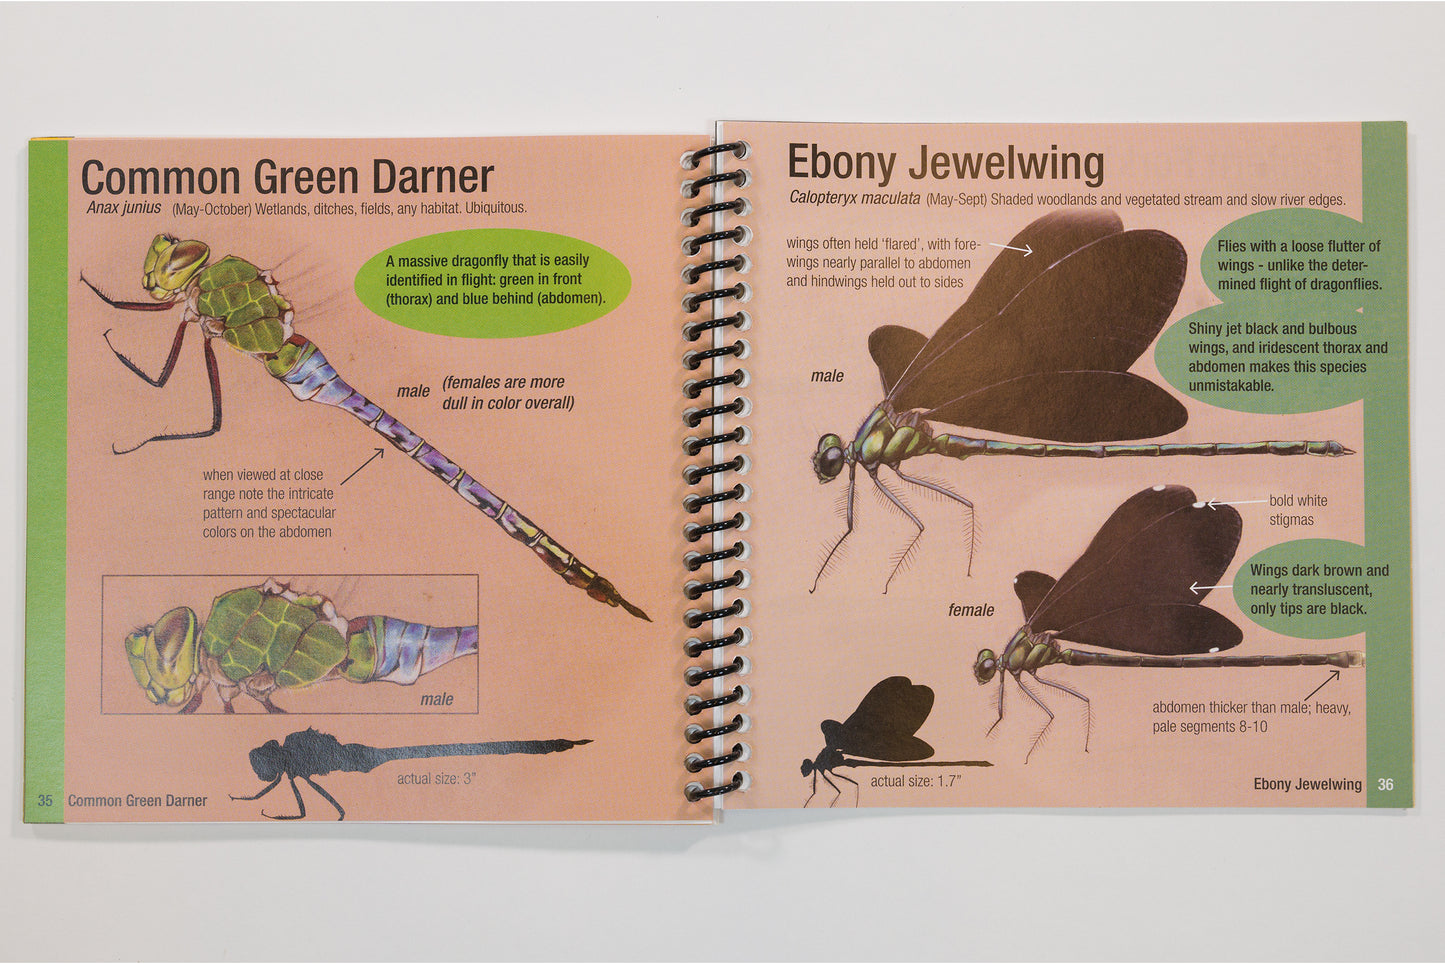 Dragonflies & Damselflies of Cleveland Metroparks